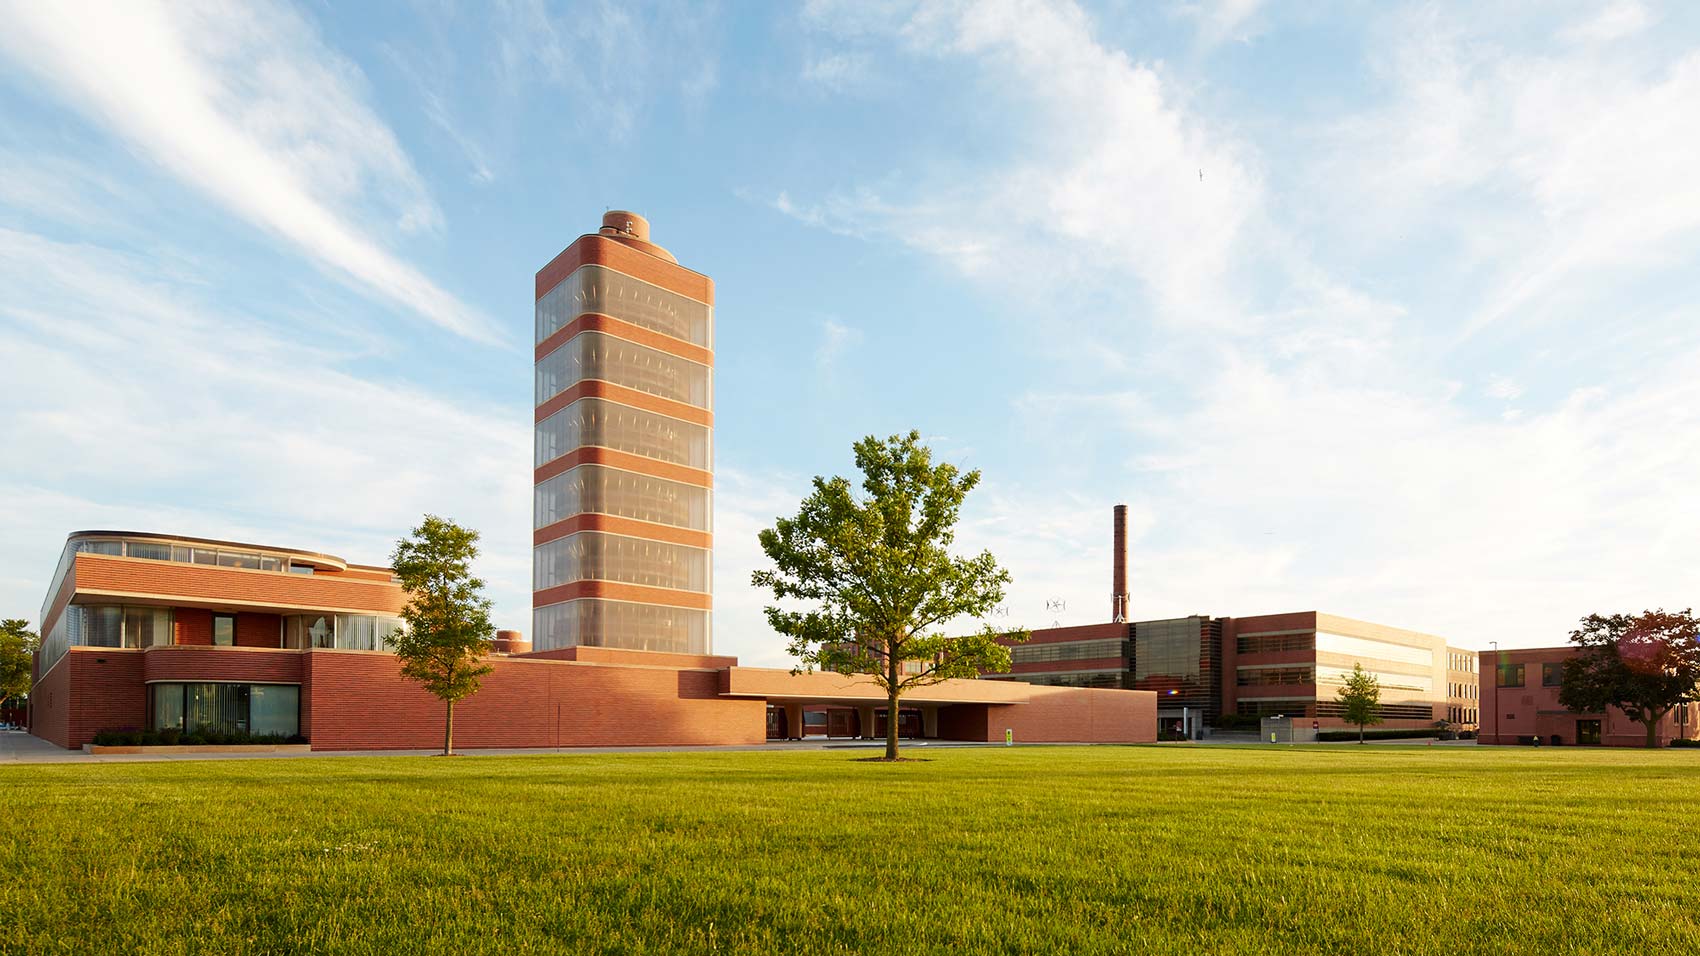 SC Johnson headquarters campus in Racine, Wisconsin